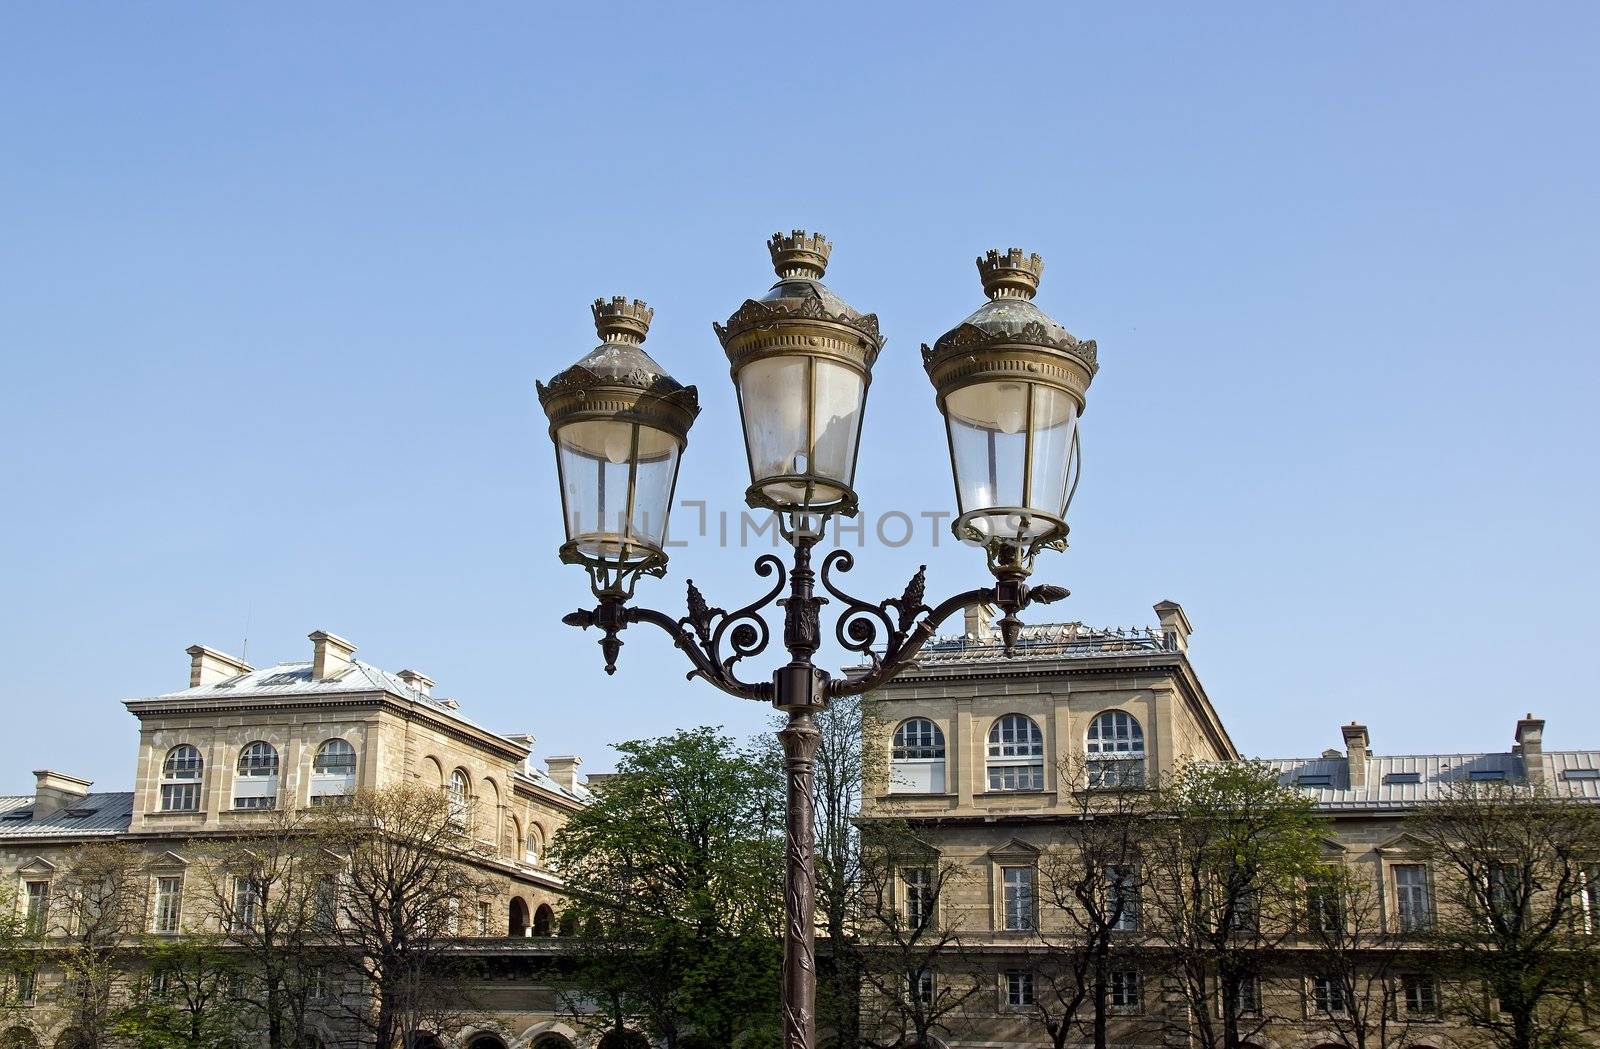 former Parisian lamppost by neko92vl